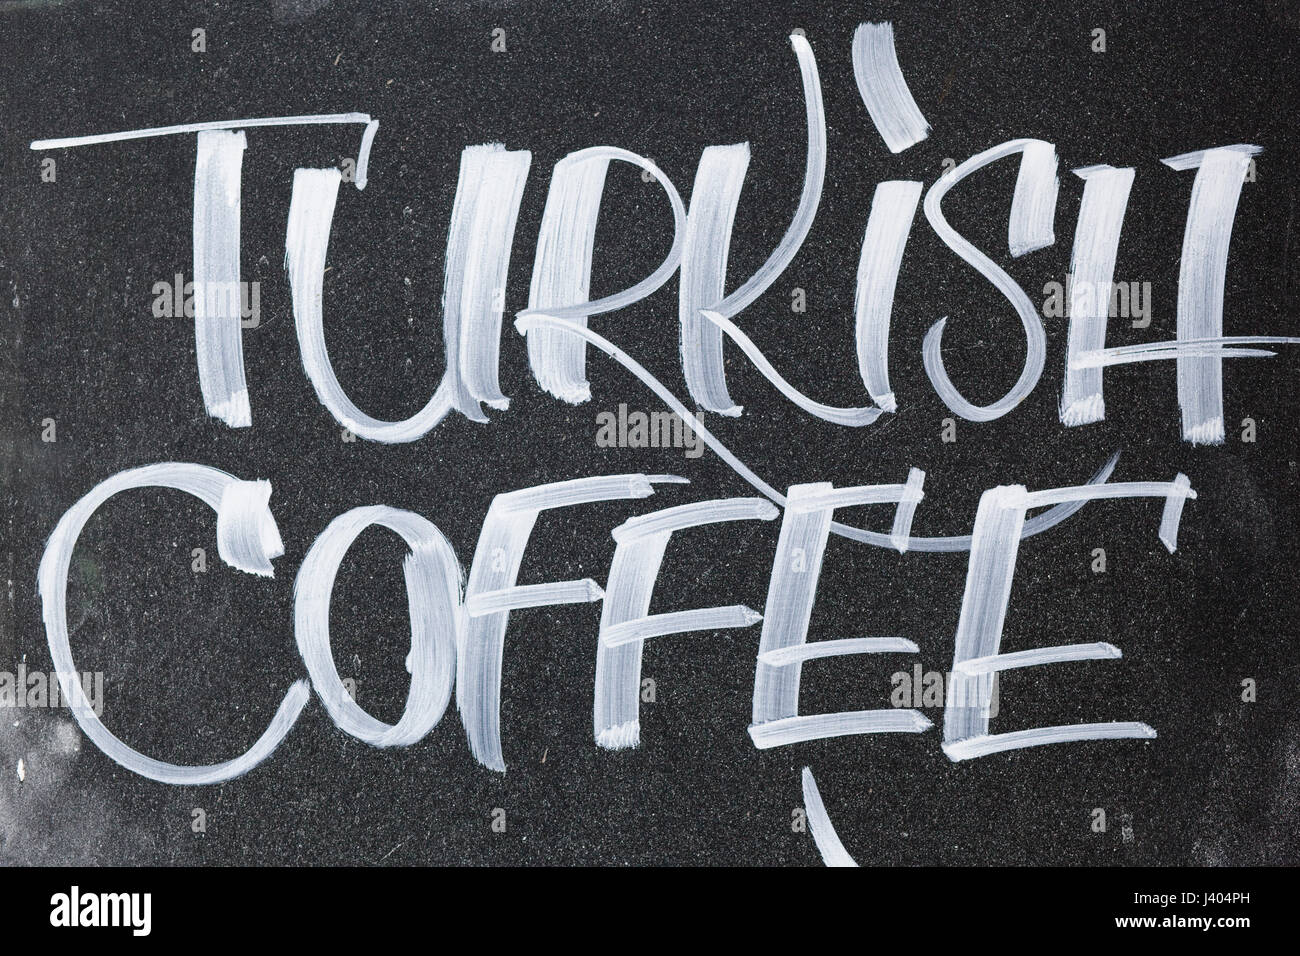 information Sign for Turkish coffee Written on a Blackboard in Chalk Stock Photo